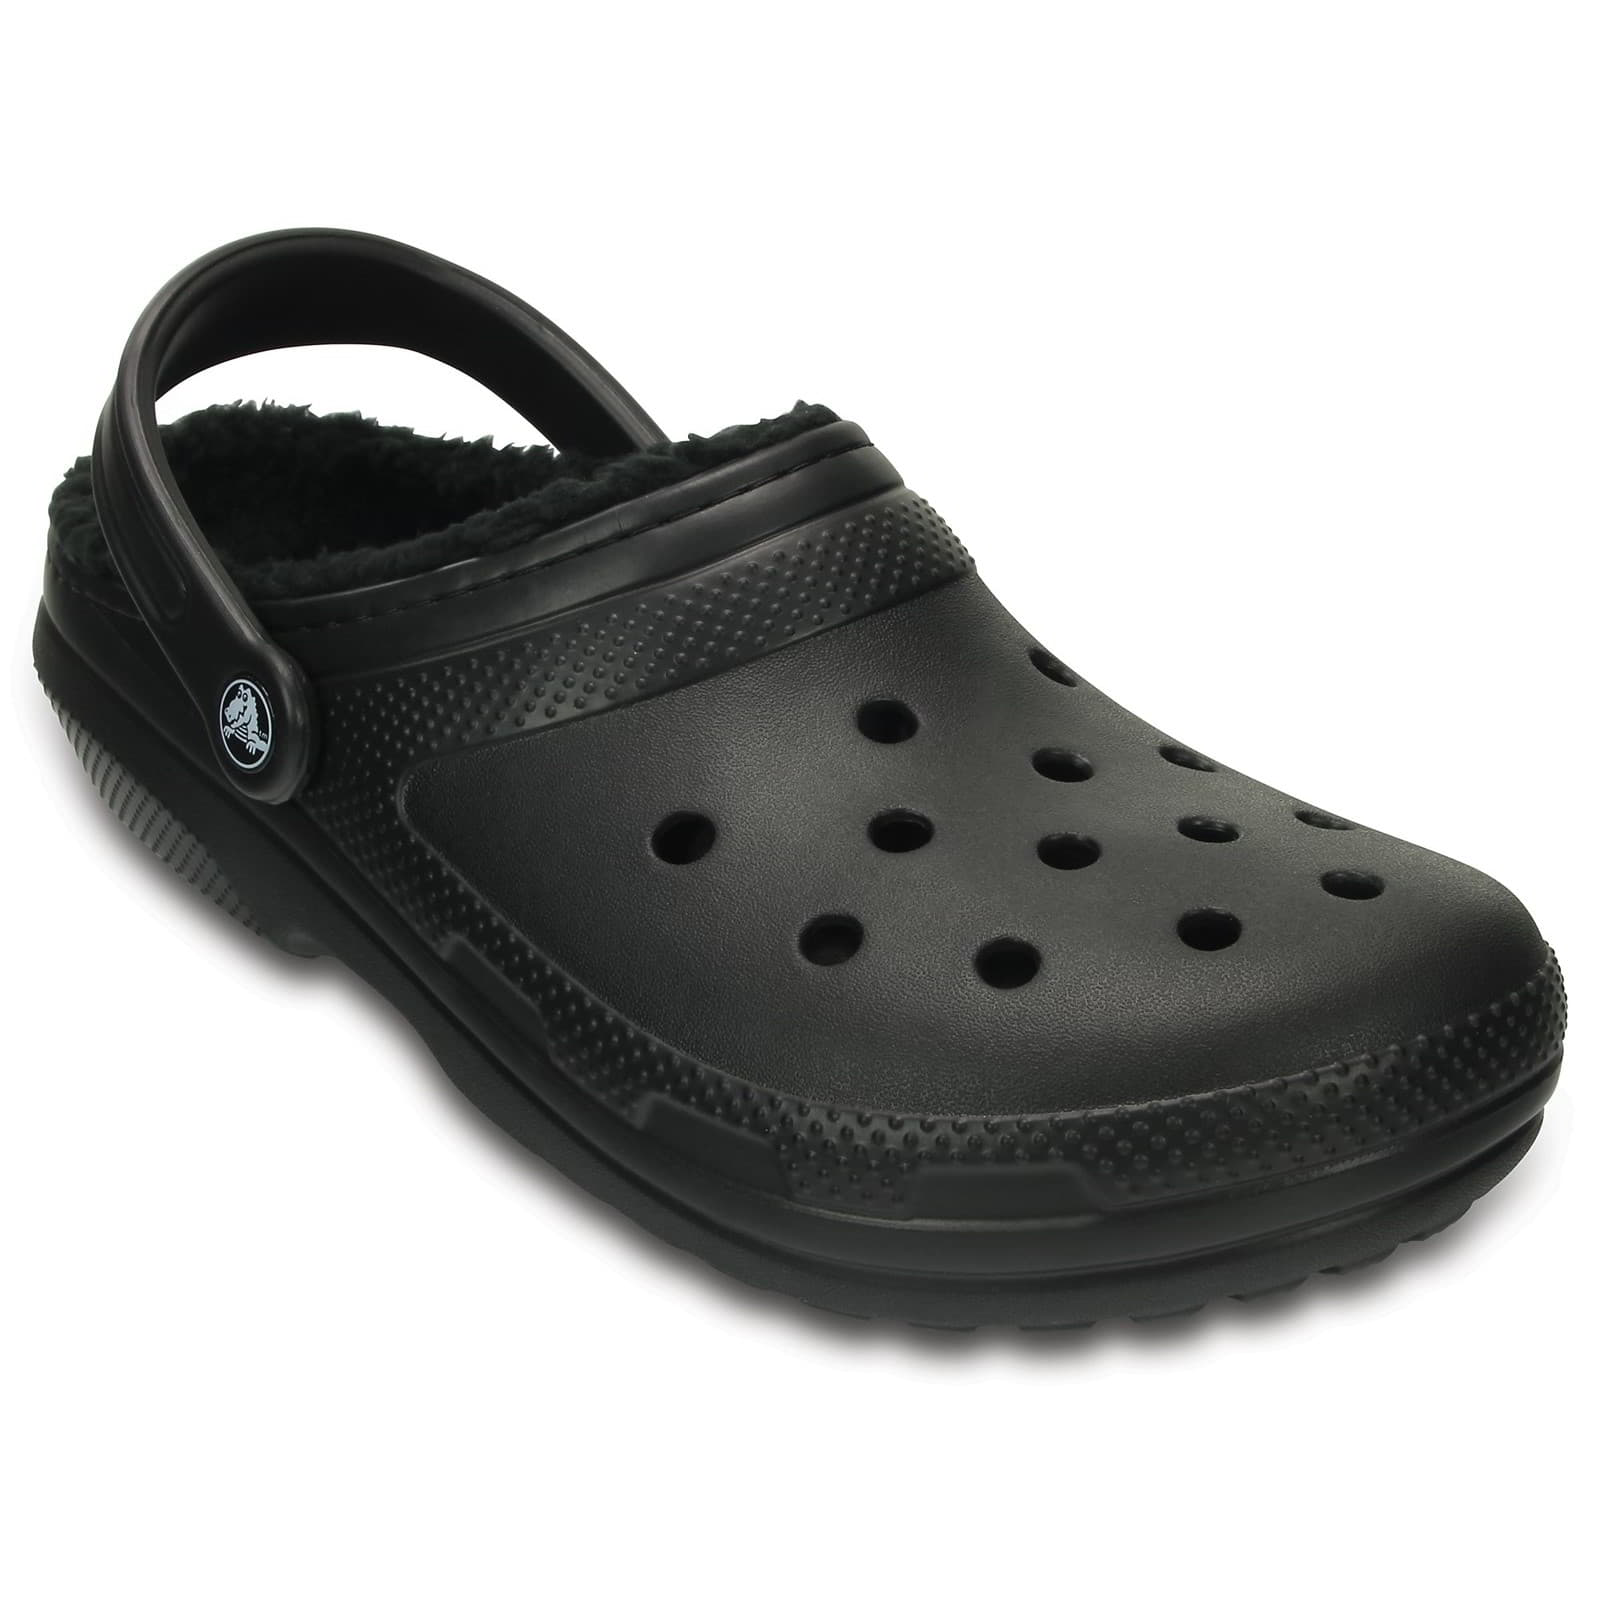 Crocs Men's Women's Classic Lined Clogs Slip On Slippers Shoes - UK 7